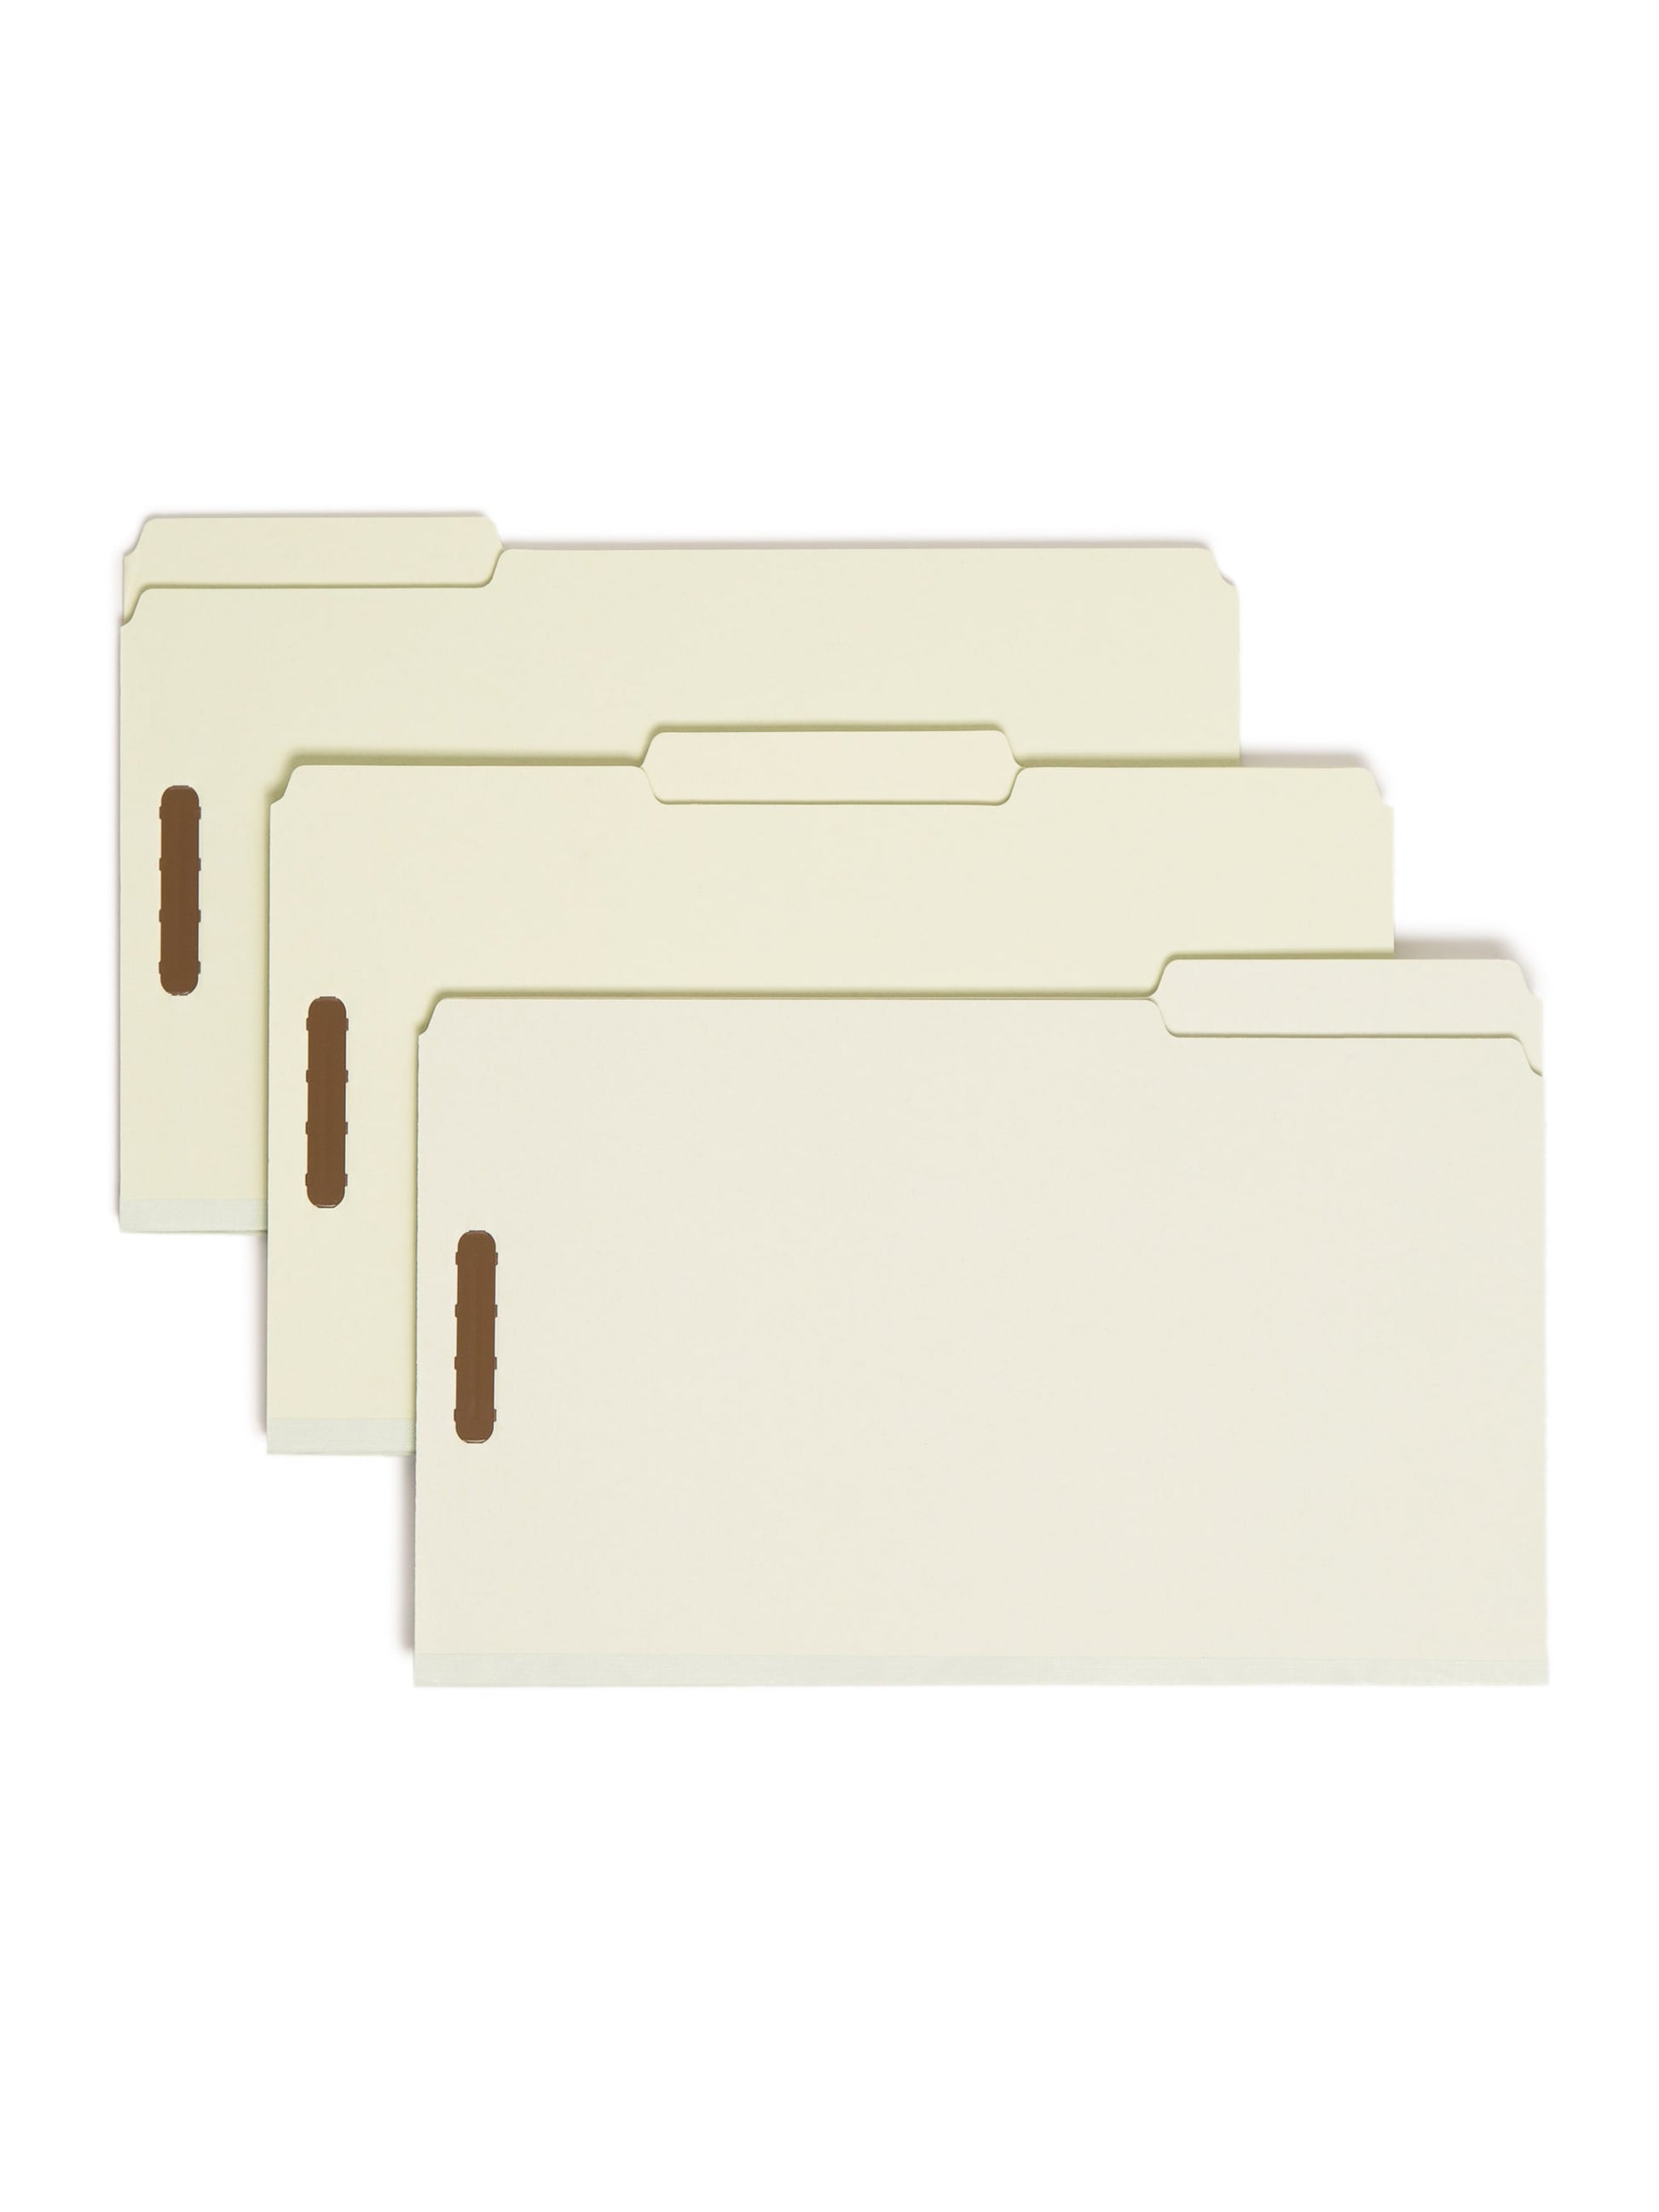 Pressboard Fastener File Folders, 3 inch Expansion, Gray/Green Color, Legal Size, Set of 25, 086486200059